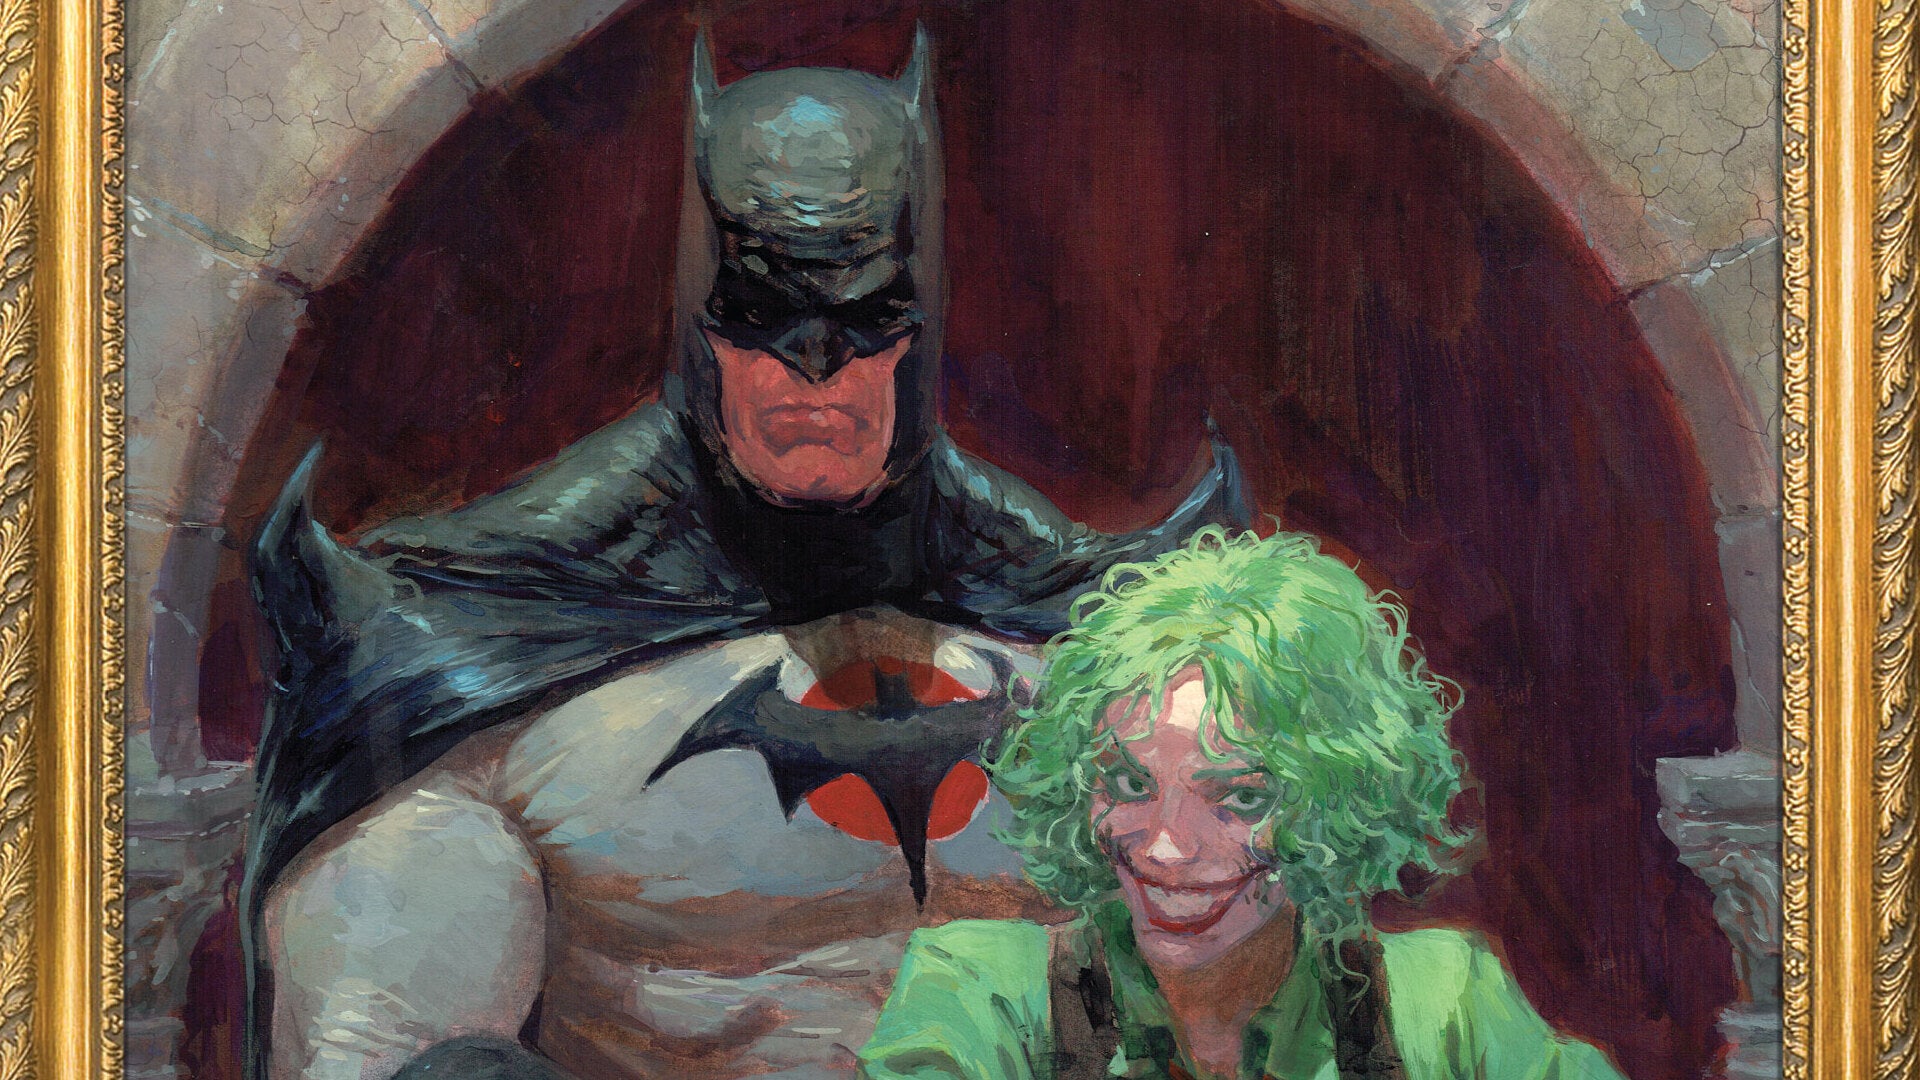 Batman standing with the Joker in a portrait